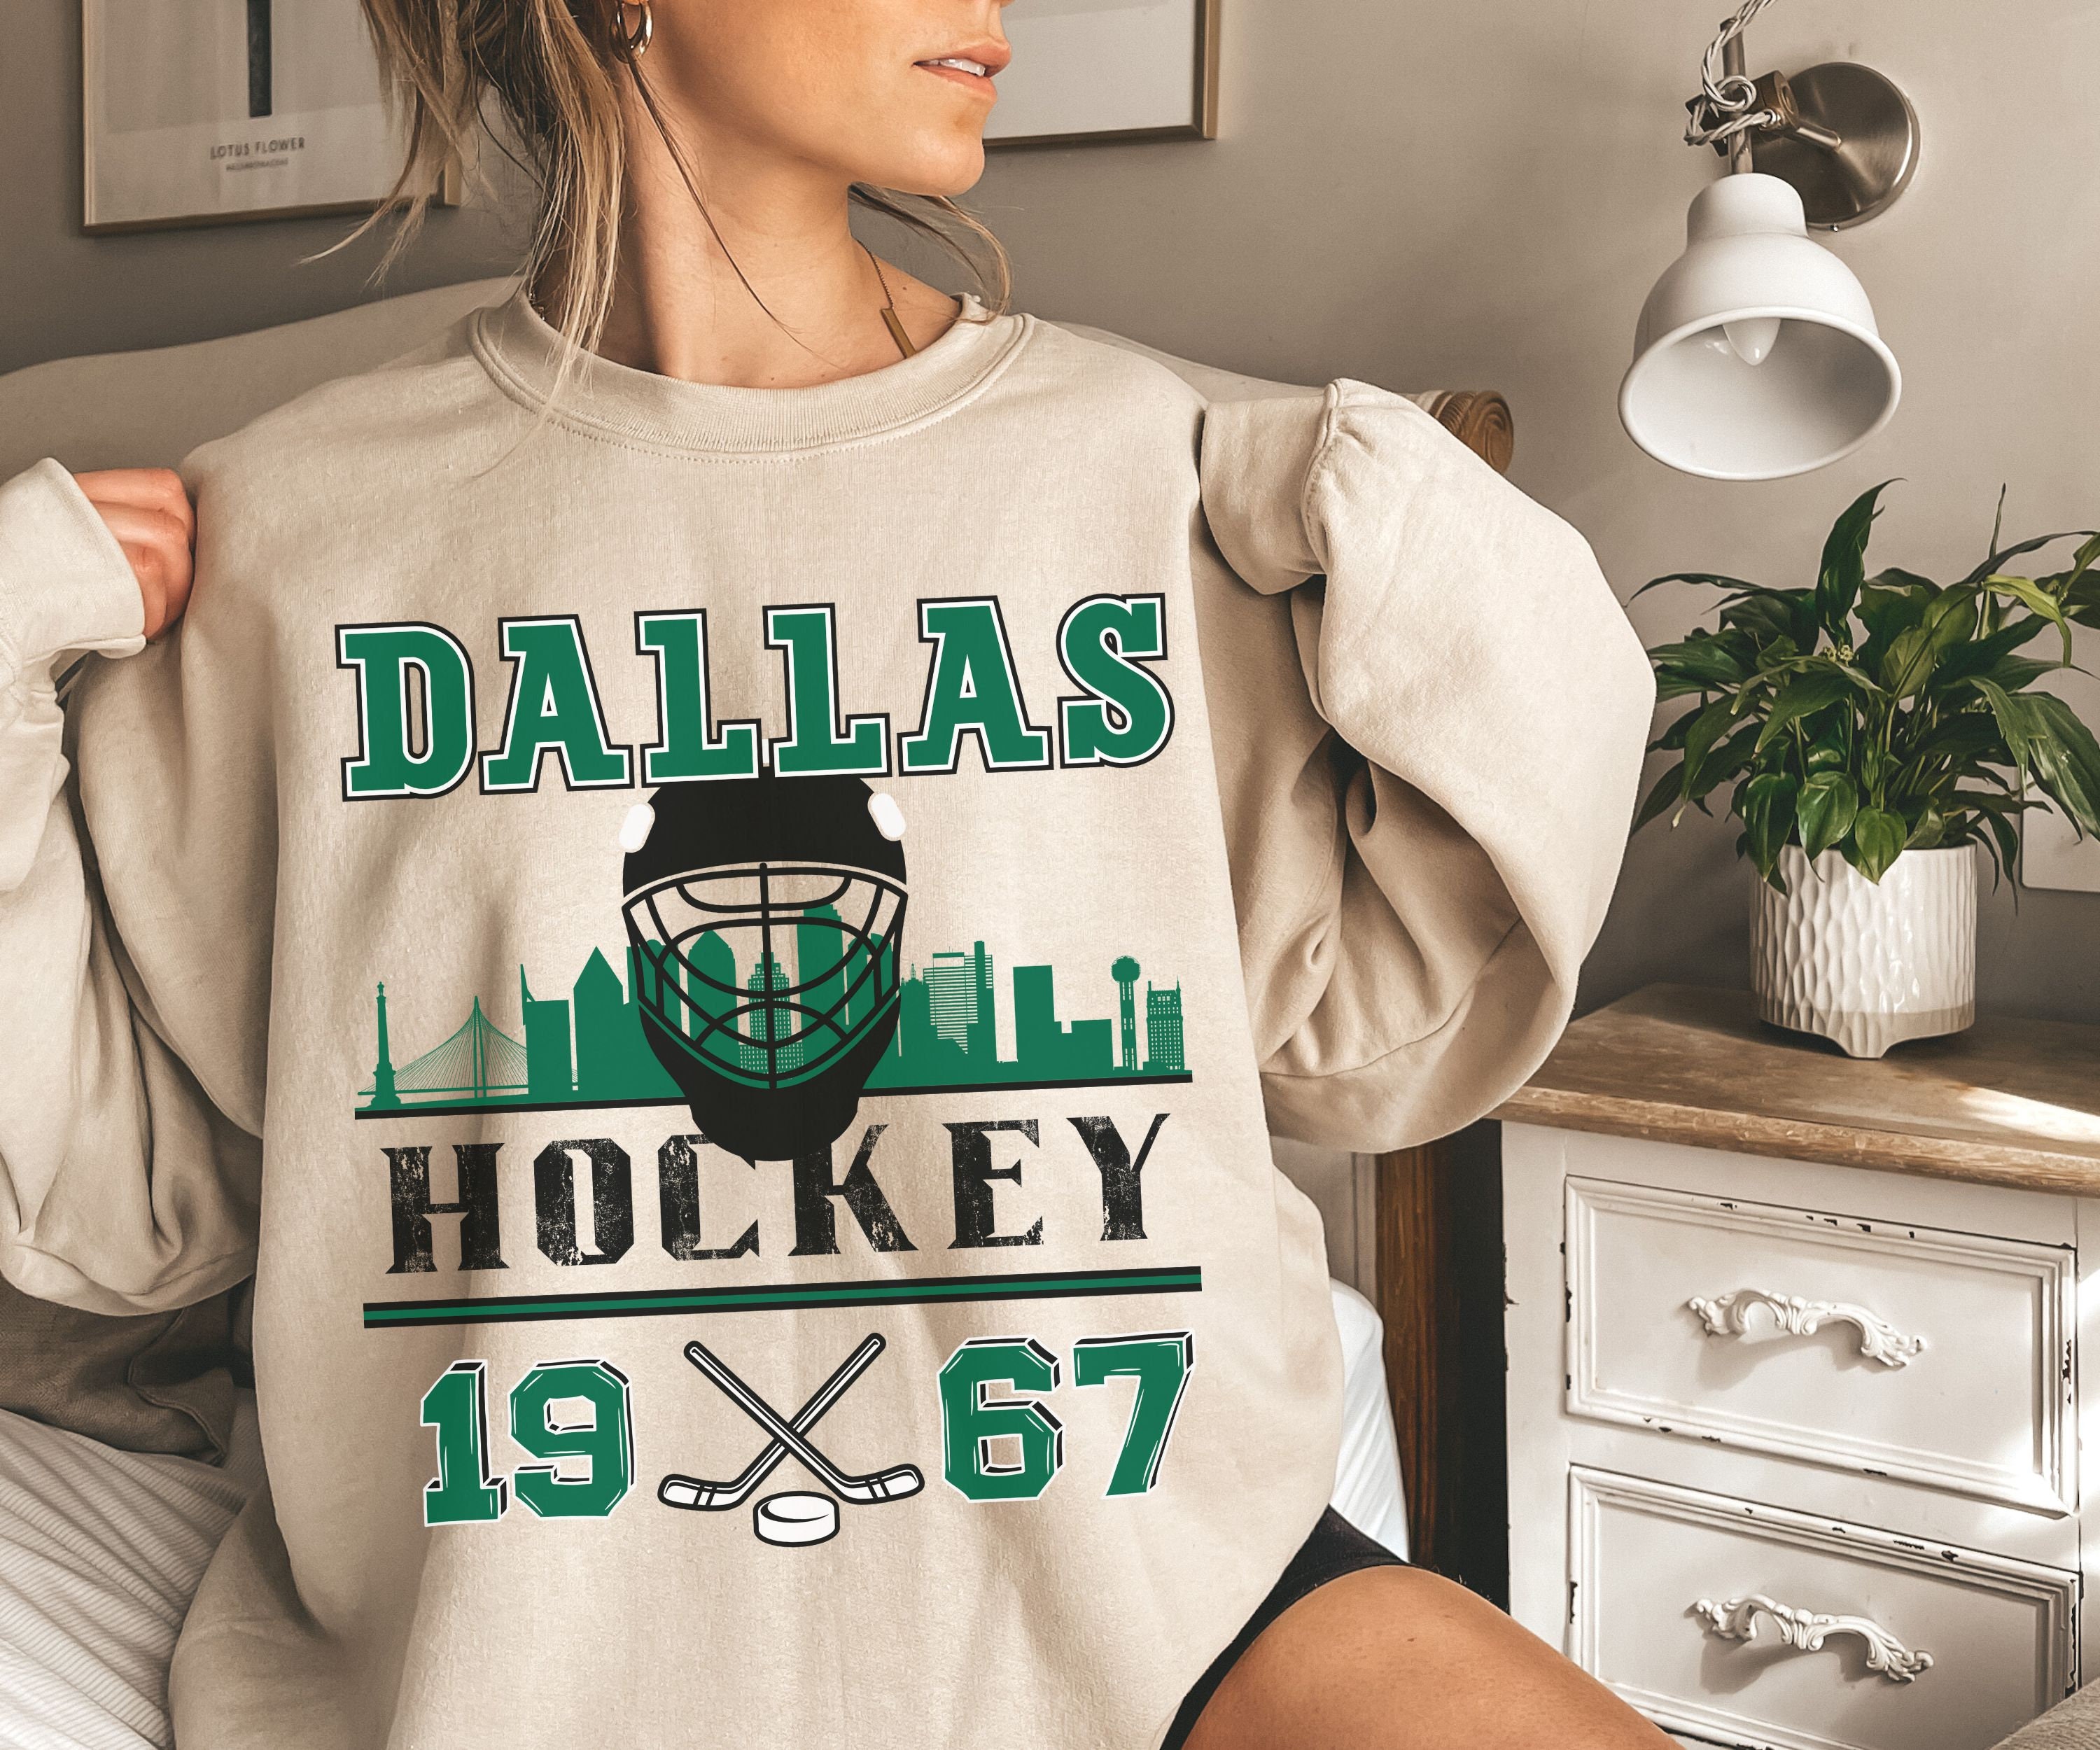 Dallas Stars NHL Flower Hawaiian Shirt Best Gift For Men And Women Fans